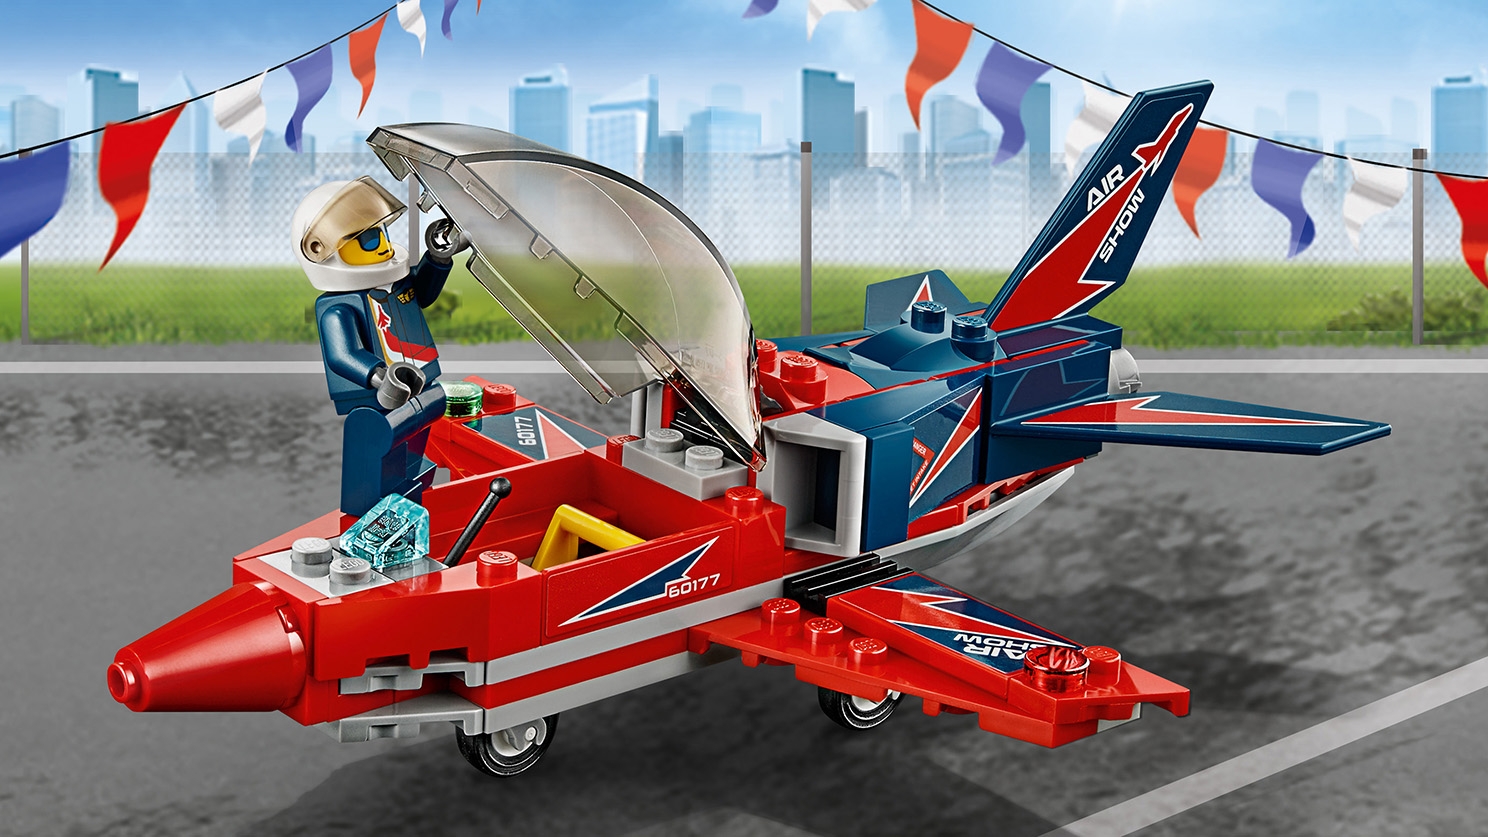 Lego City Airshow Jet Airplane Kit 60177 New